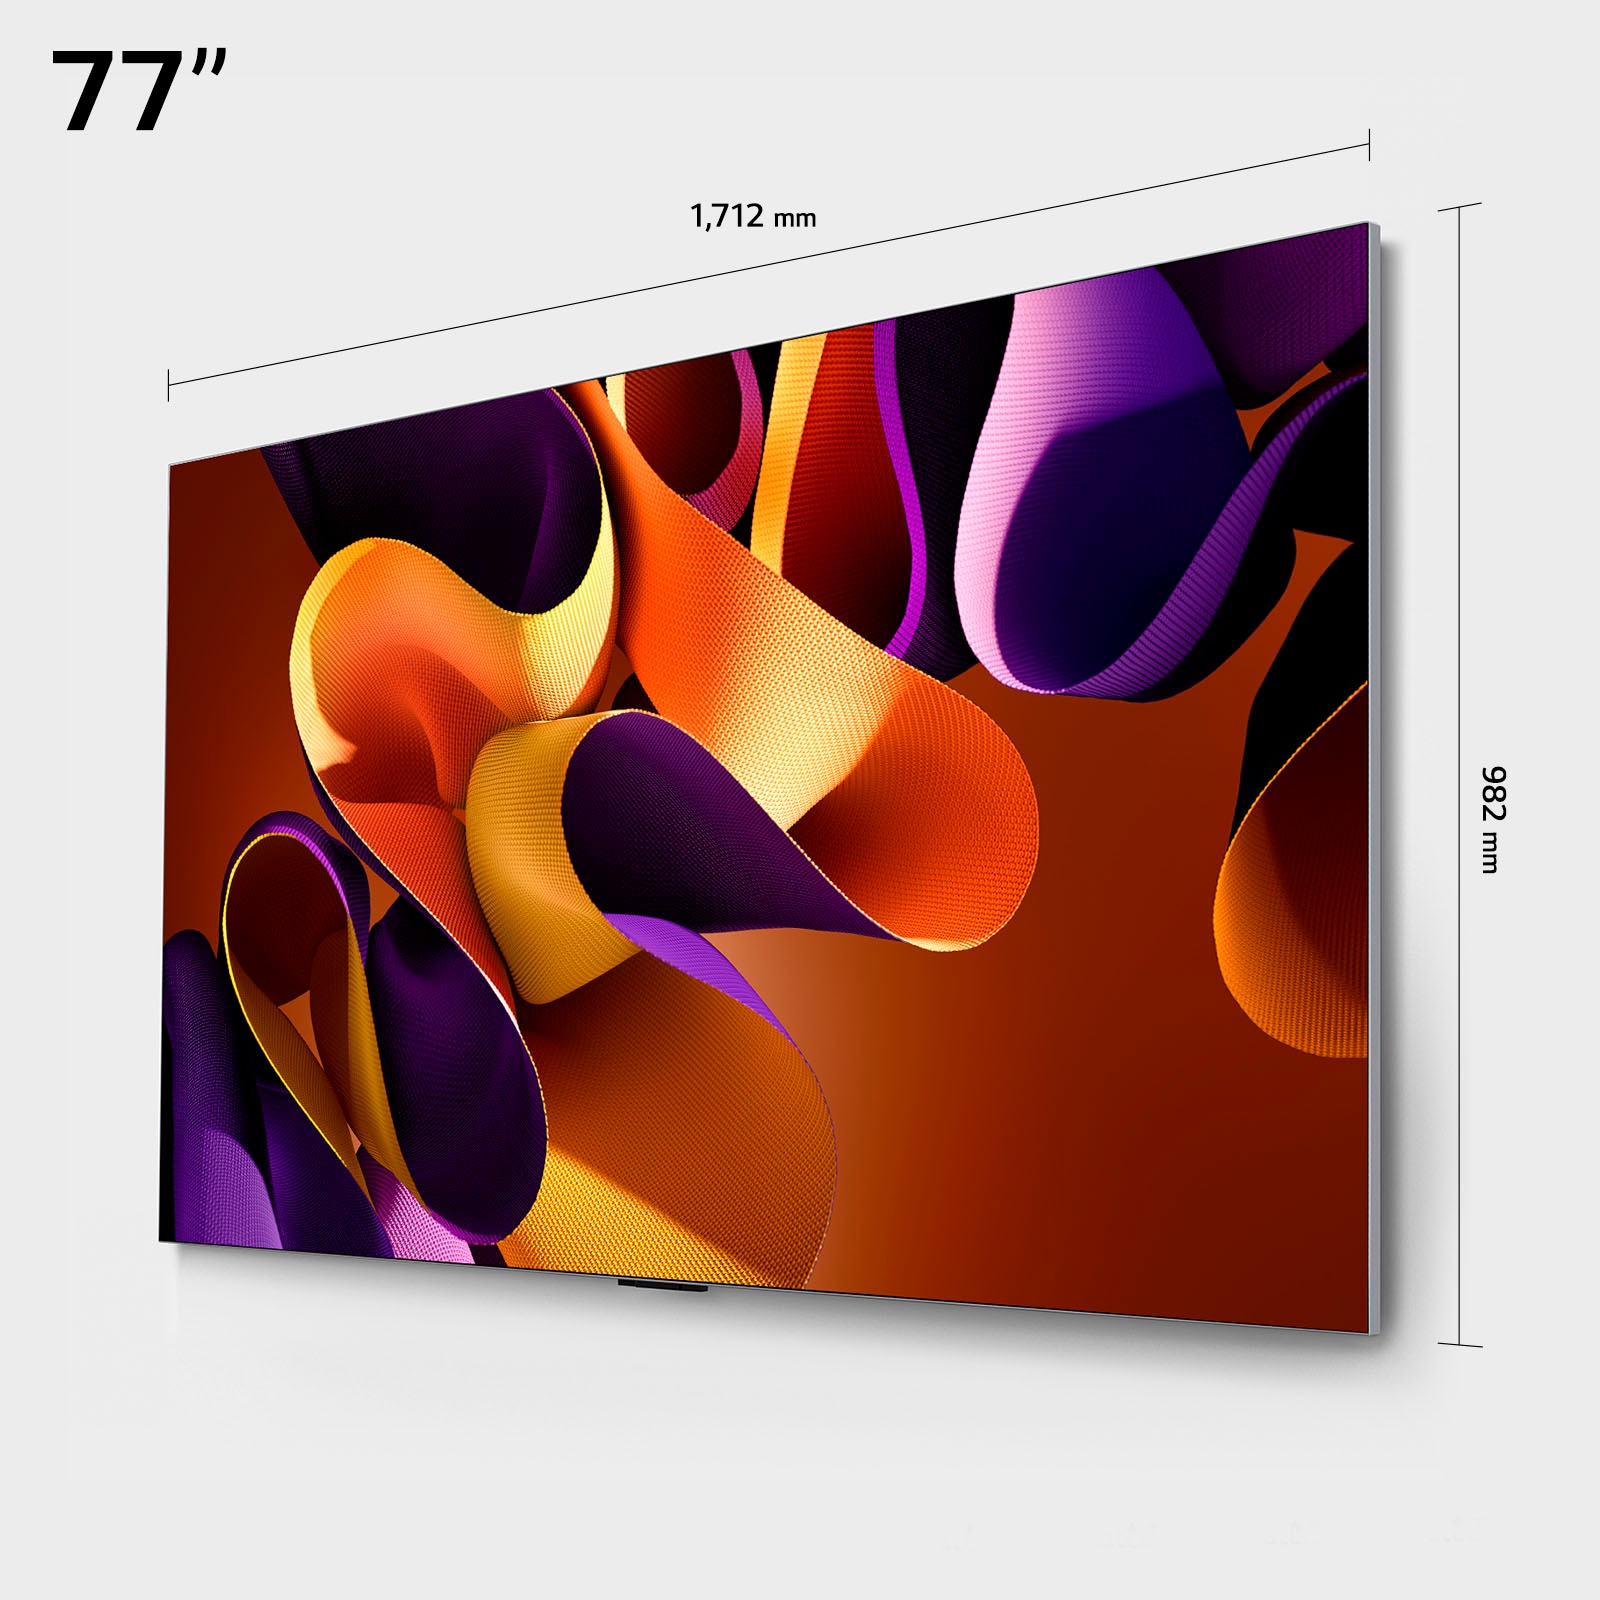 LG OLED-Fernseher, 195 cm/77 Zoll, 4K Ultra HD, Smart-TV